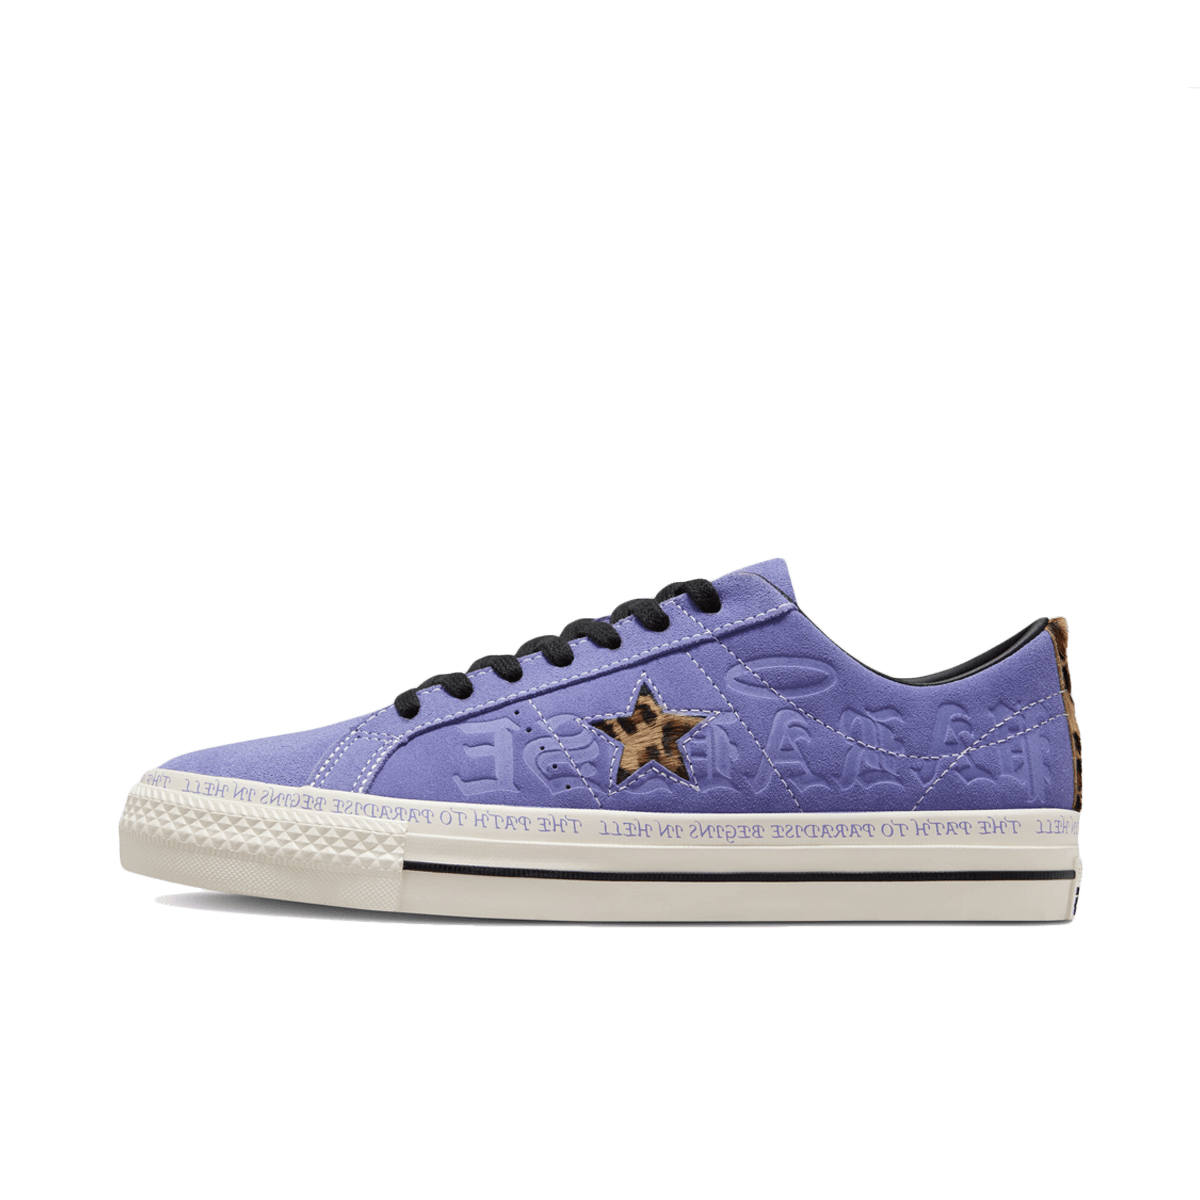 Sean Pablo x Converse One Star Pro 'Wild Lilac' A04371C